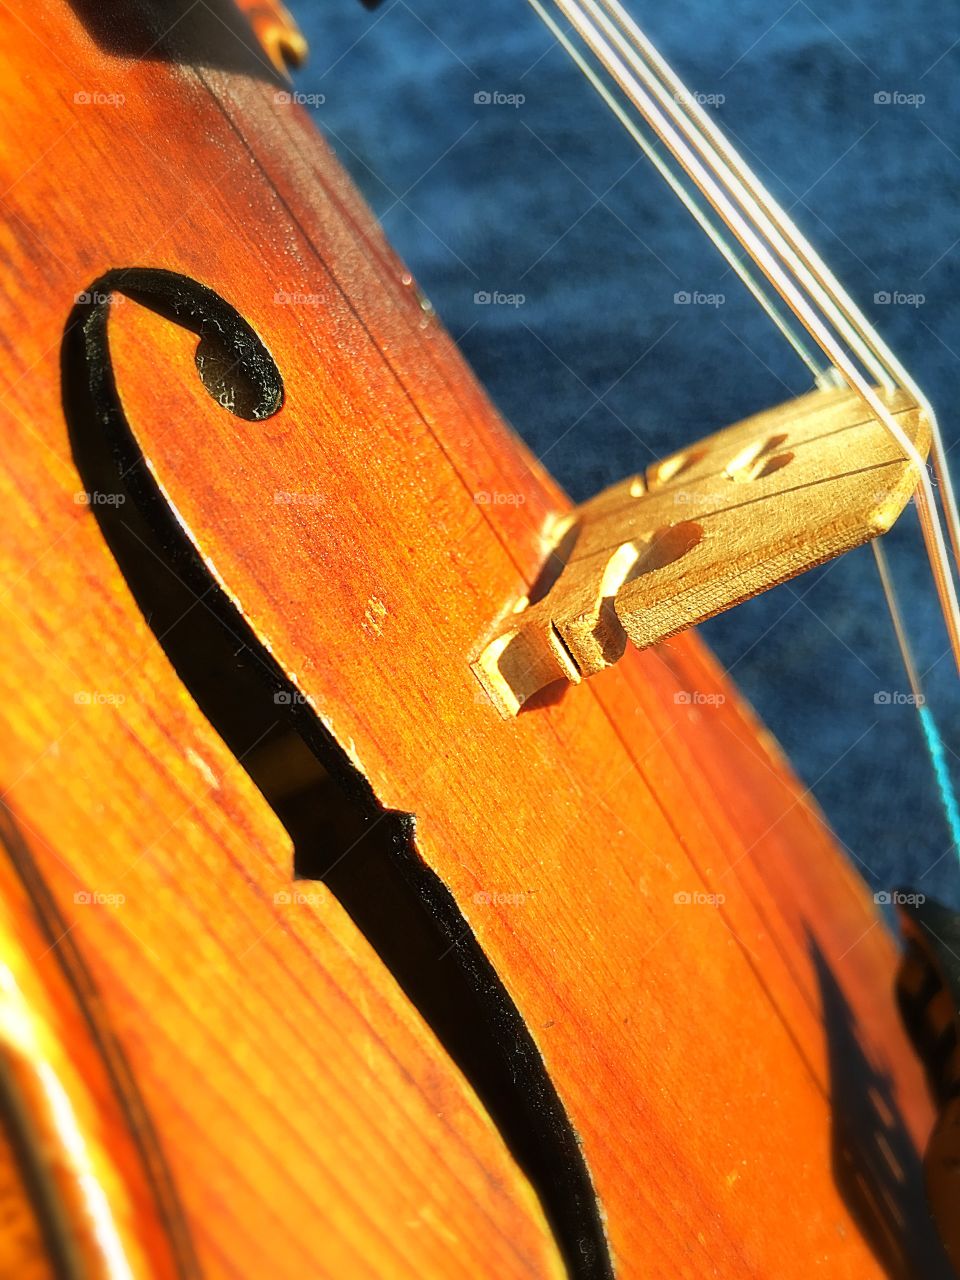 Closeup of violin bridge